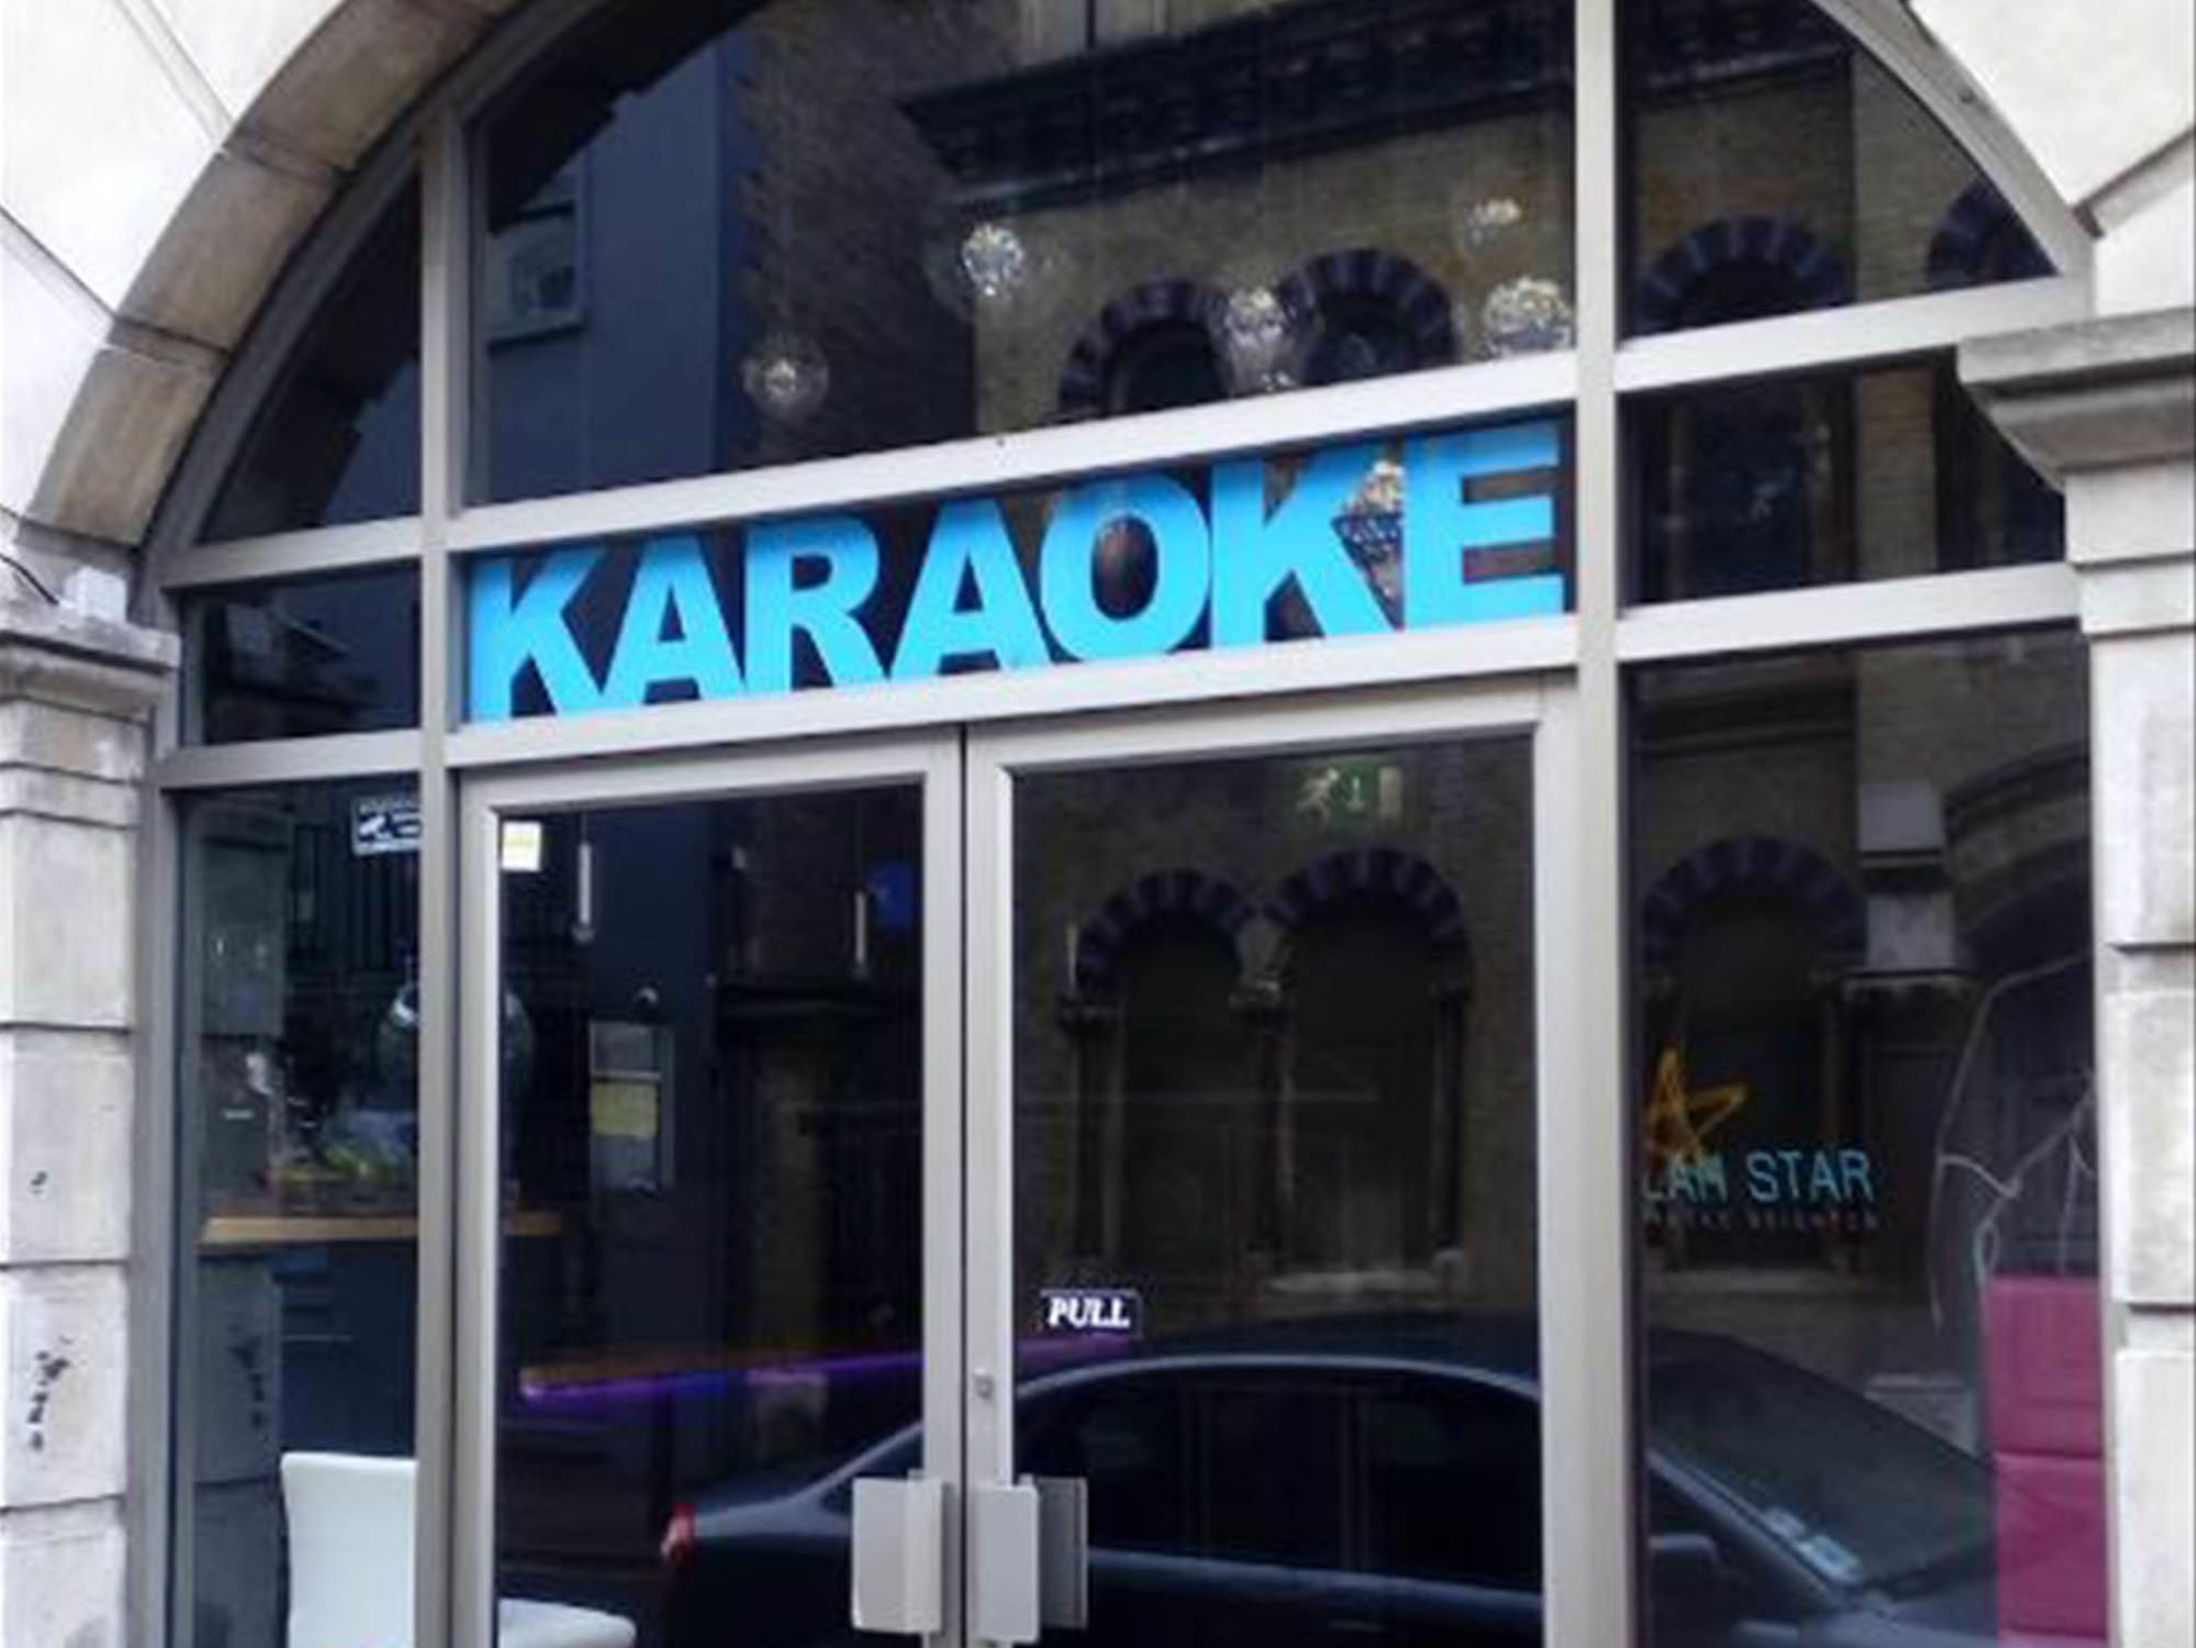 Best Bars in Brighton - Slam Star Karaoke